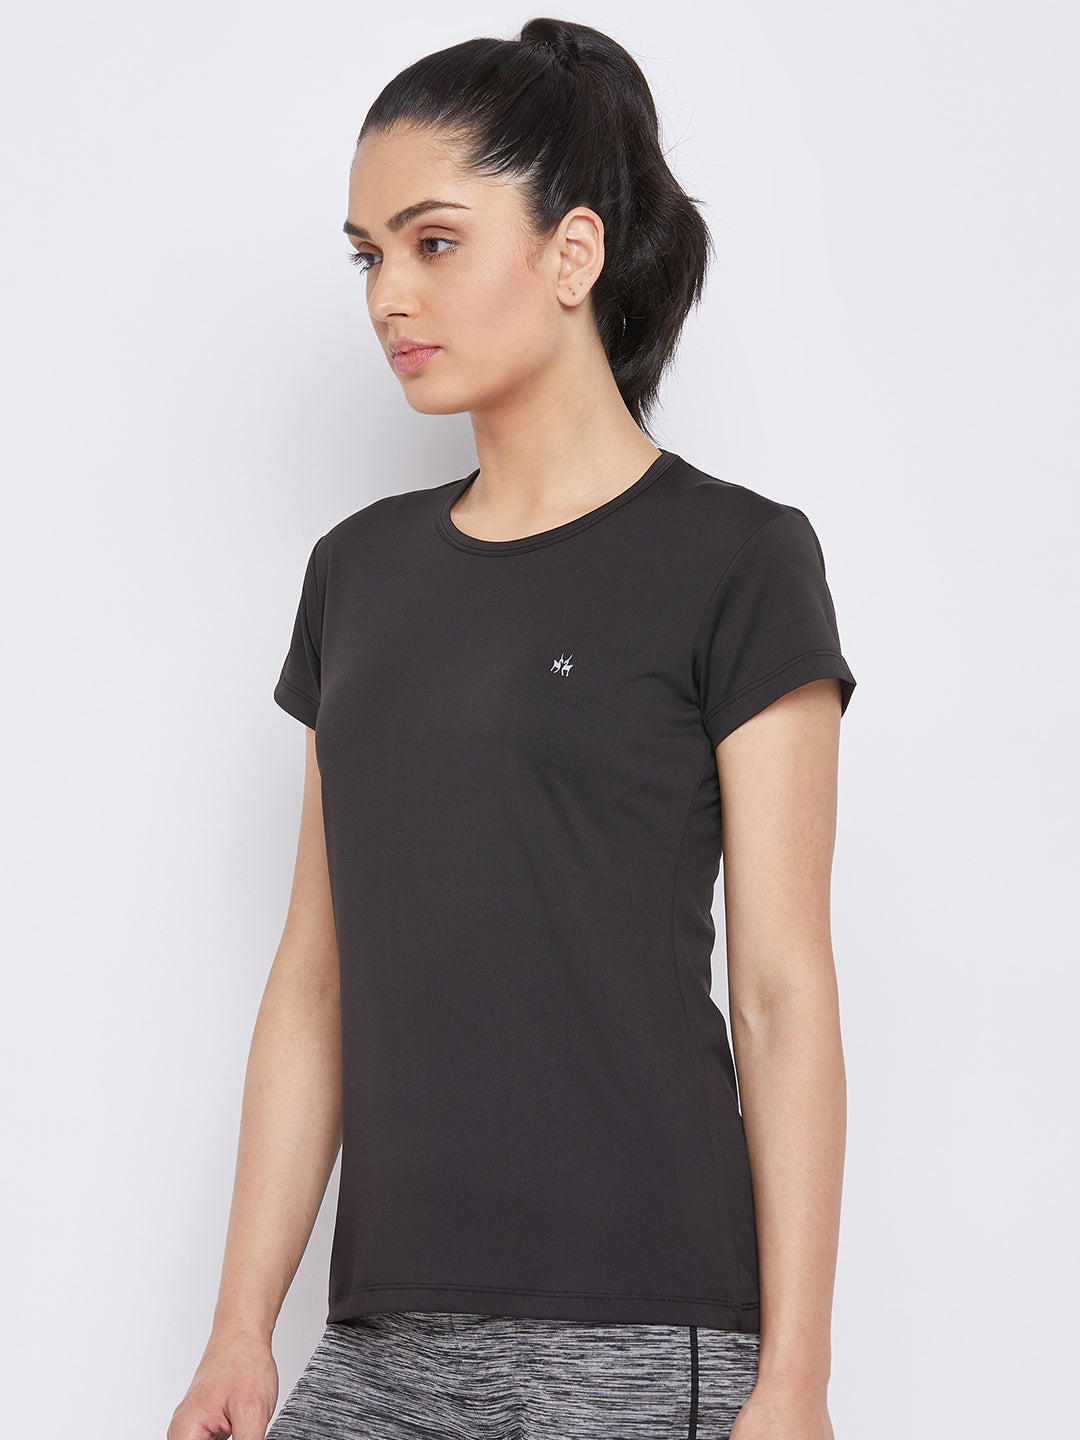 Black Sports T-shirt - Women T-Shirts